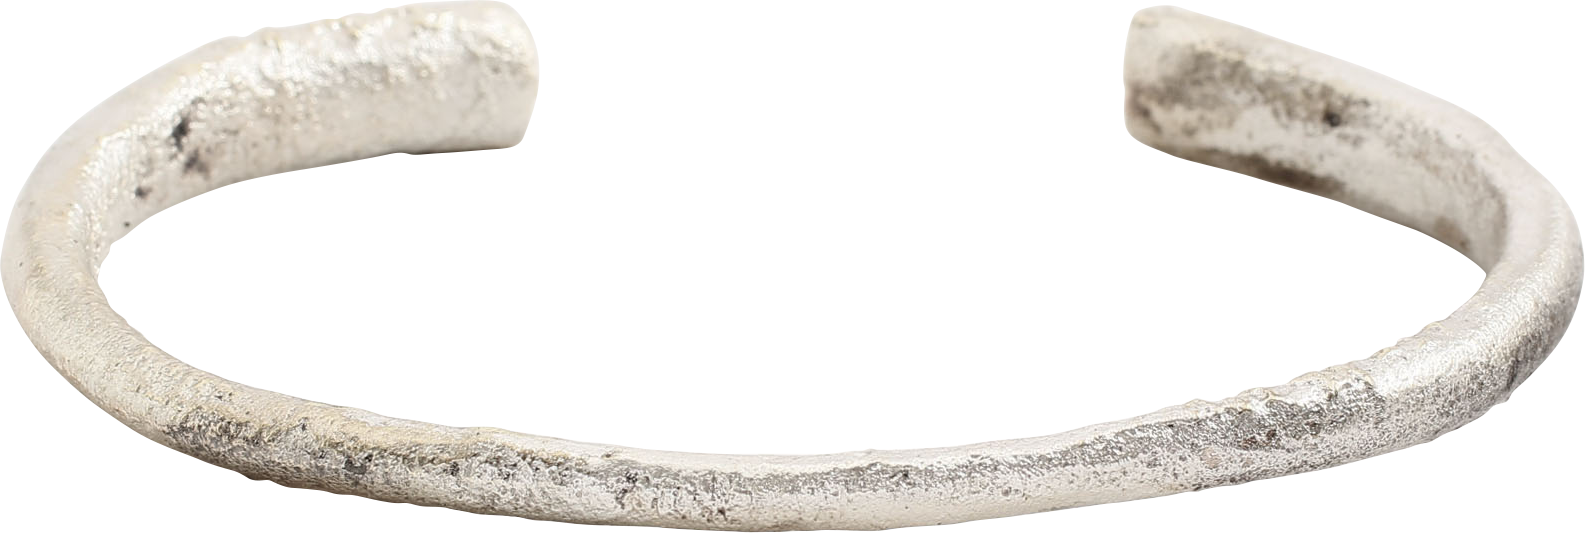 ROMAN BRACELET FIRST-SECOND CENTURY AD - Fagan Arms (8202522165422)